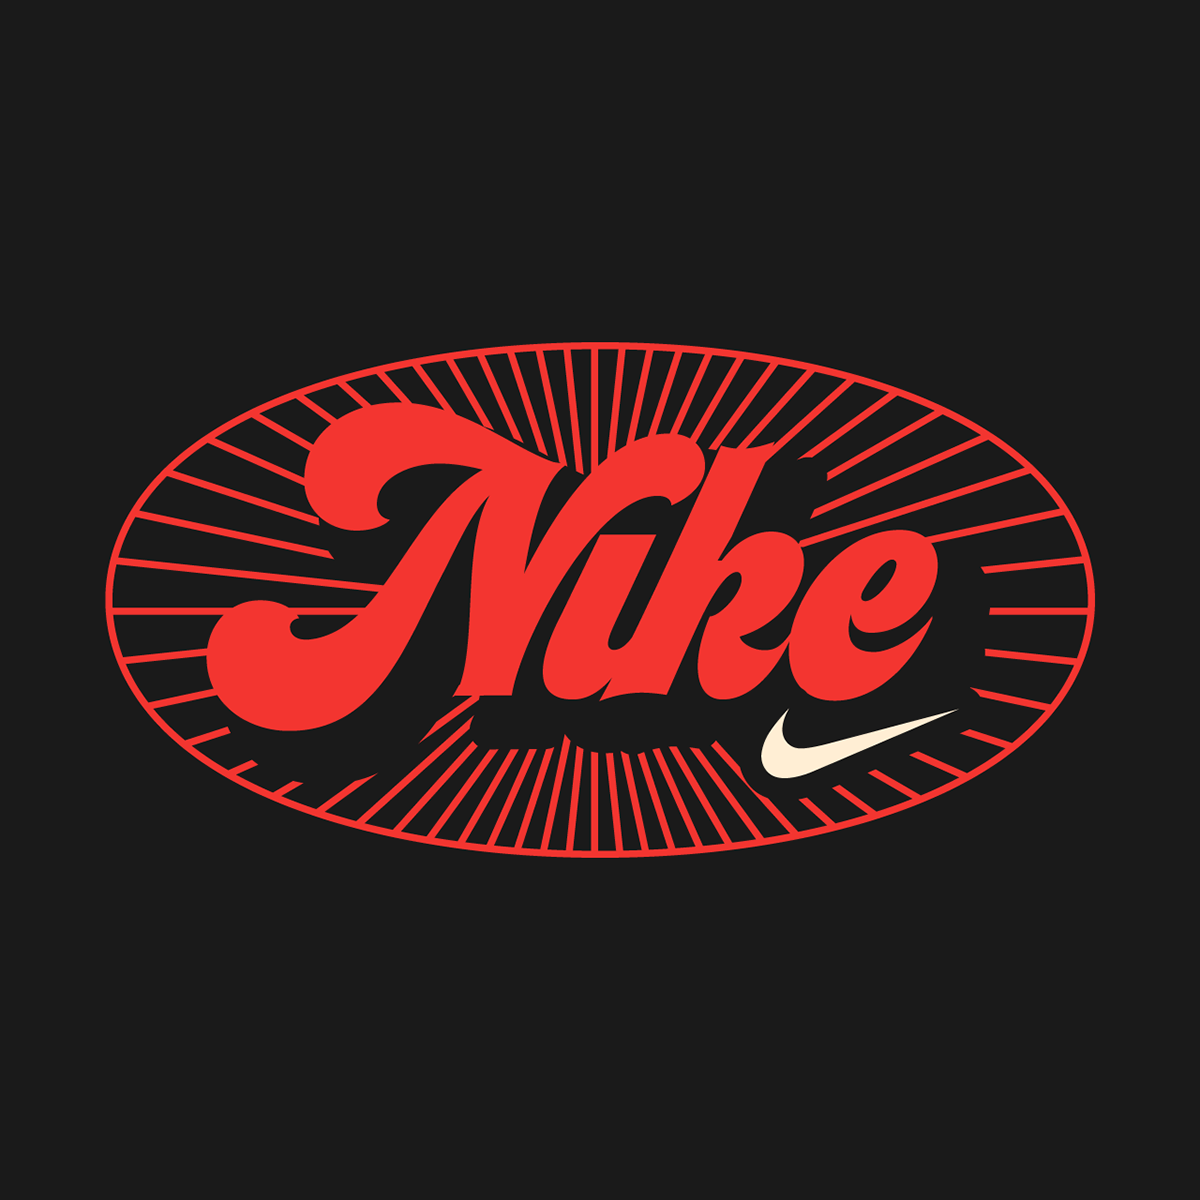 25 de Abril fanta ikea mercedes nasa Netflix Nike oreo spotify tokyo